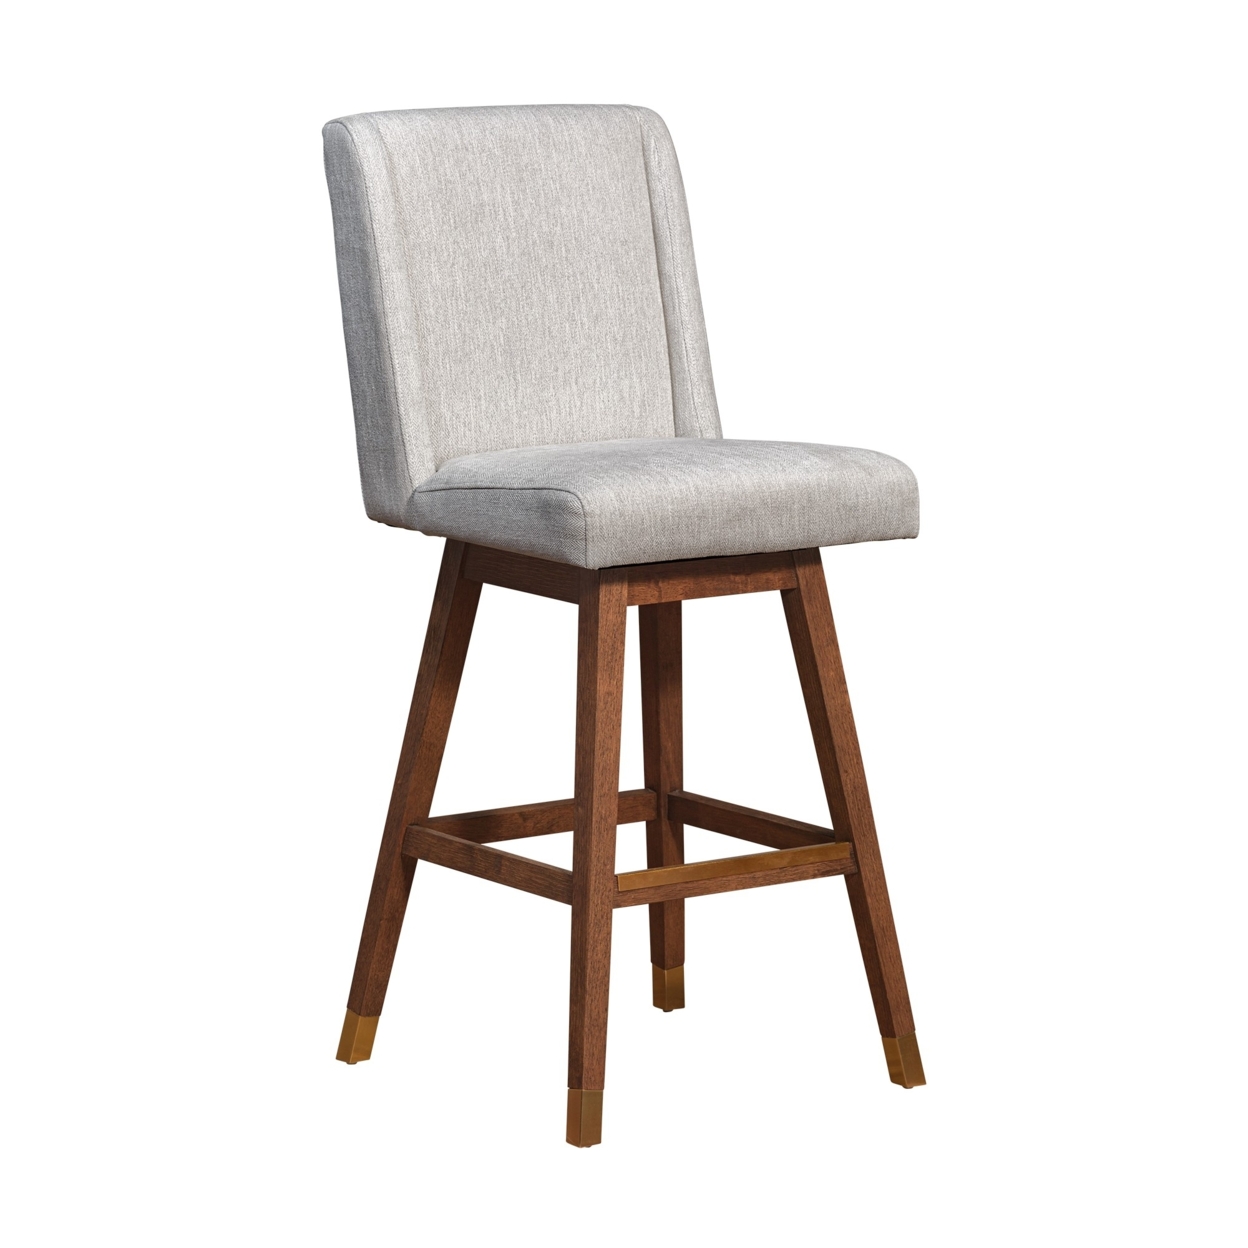 Rico 30 Inch Swivel Barstool Wingback Chair, Beige Fabric, Brown Wood Legs- Saltoro Sherpi